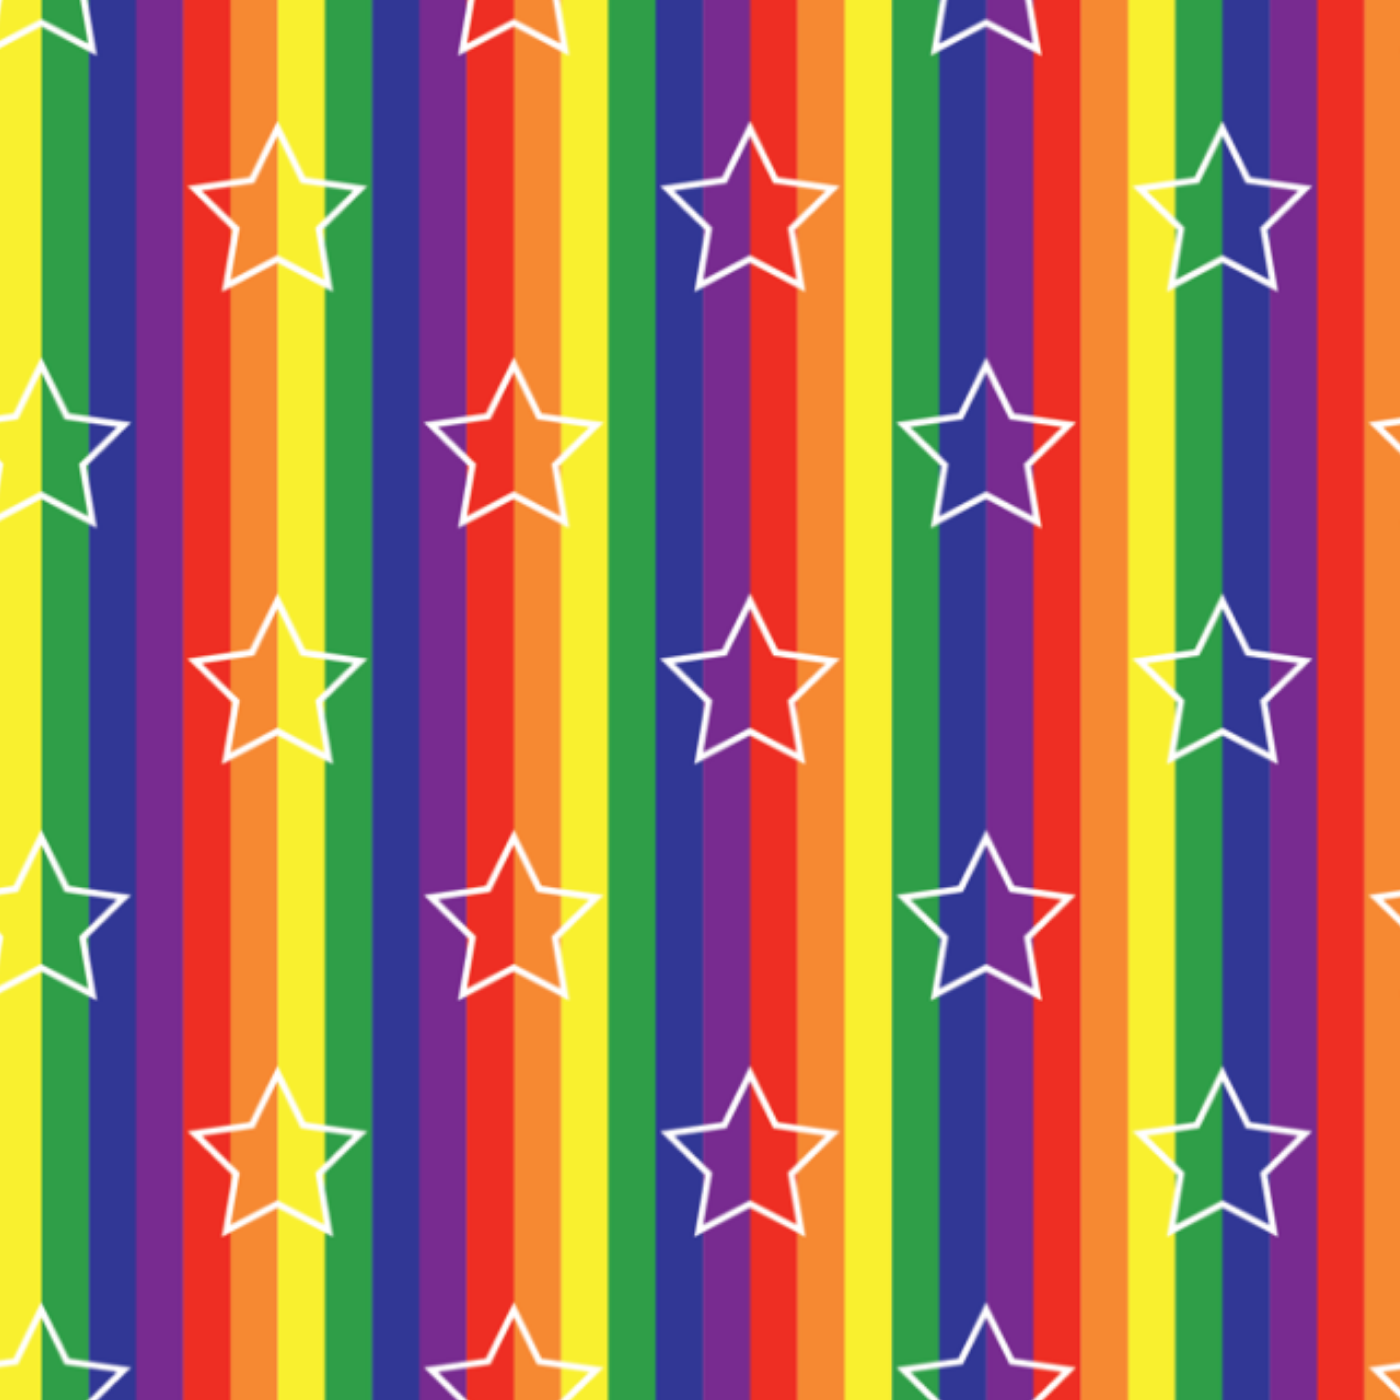 Starburst-Rainbow-Brite-Pride-Mod-Retro-Vintage-Inspired-RainbowsAndFairies.com-STARB_ORG-01